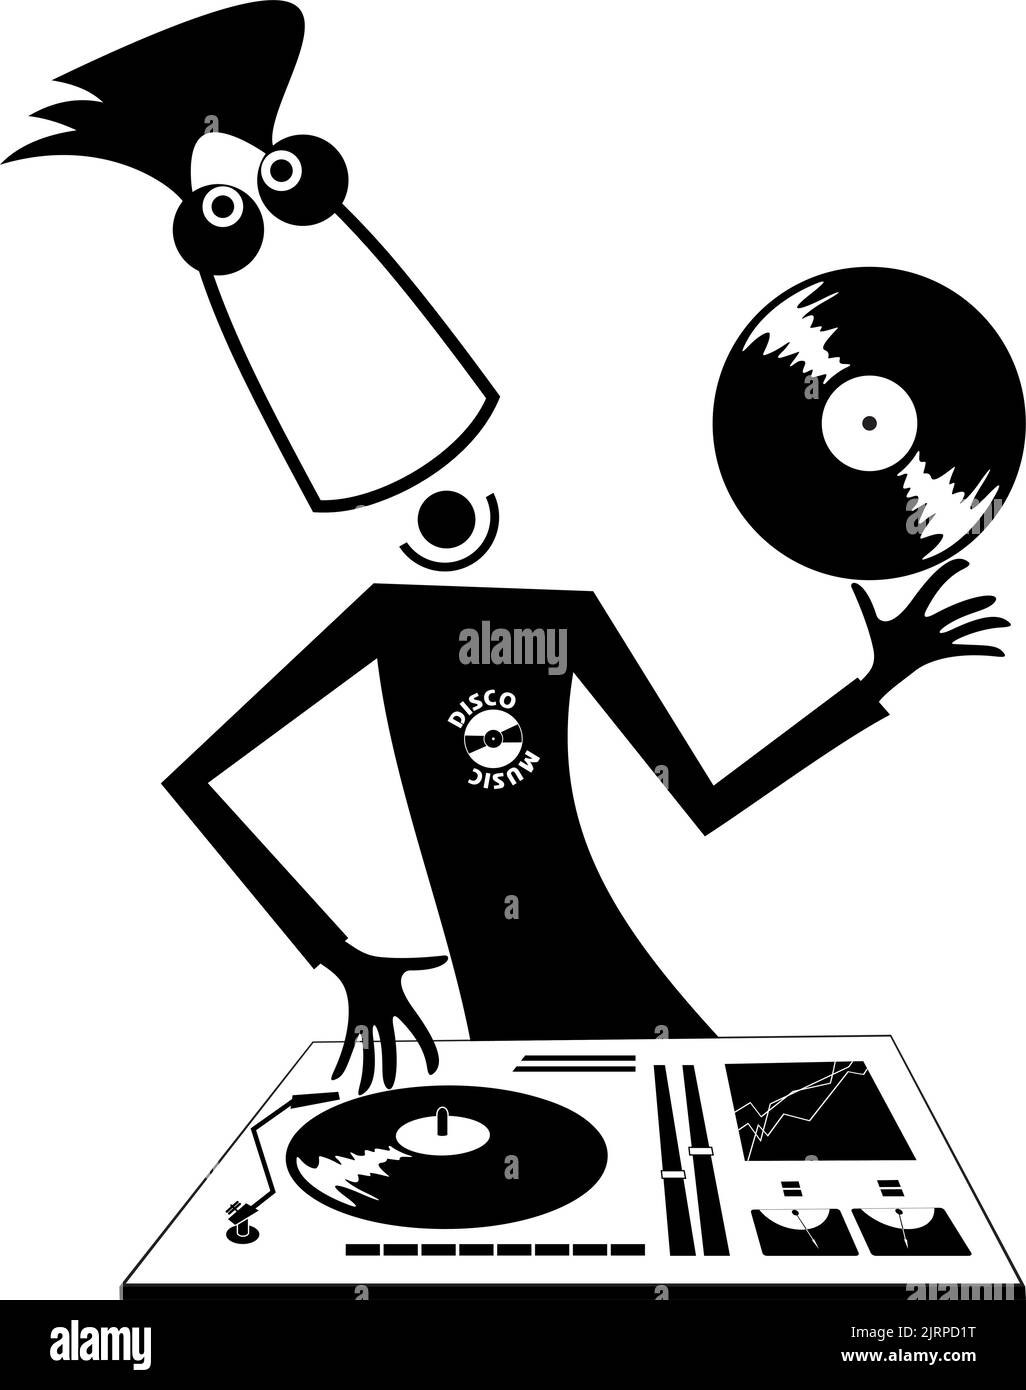 Cartoon funny DJ illustration. Smiling DJ performing music on the control panel black on white illustration Stock Vector